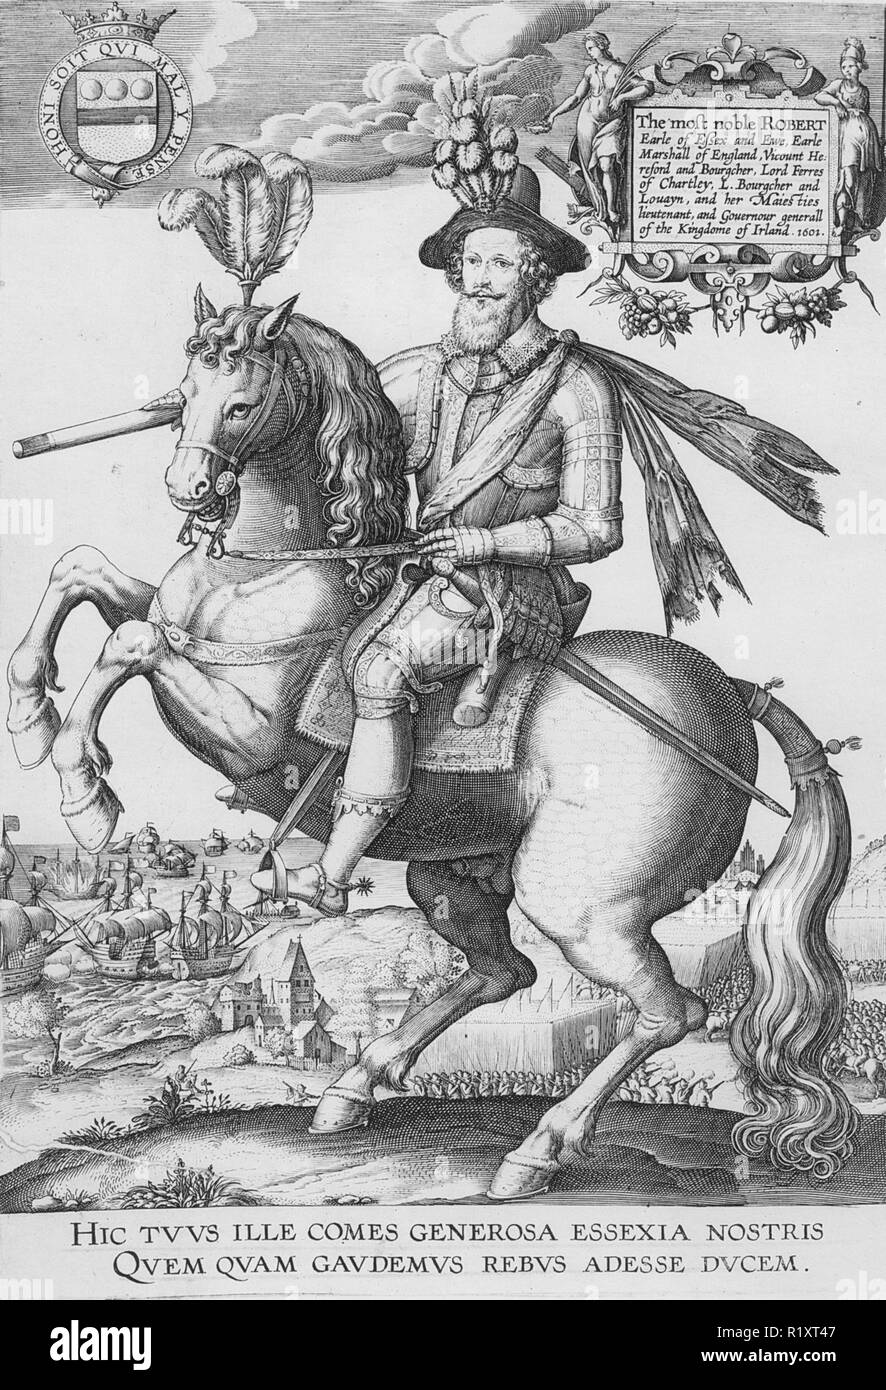 ROBERT DEVEREUX, 2° Conte di Essex (1565-1601) nobile inglese Foto Stock